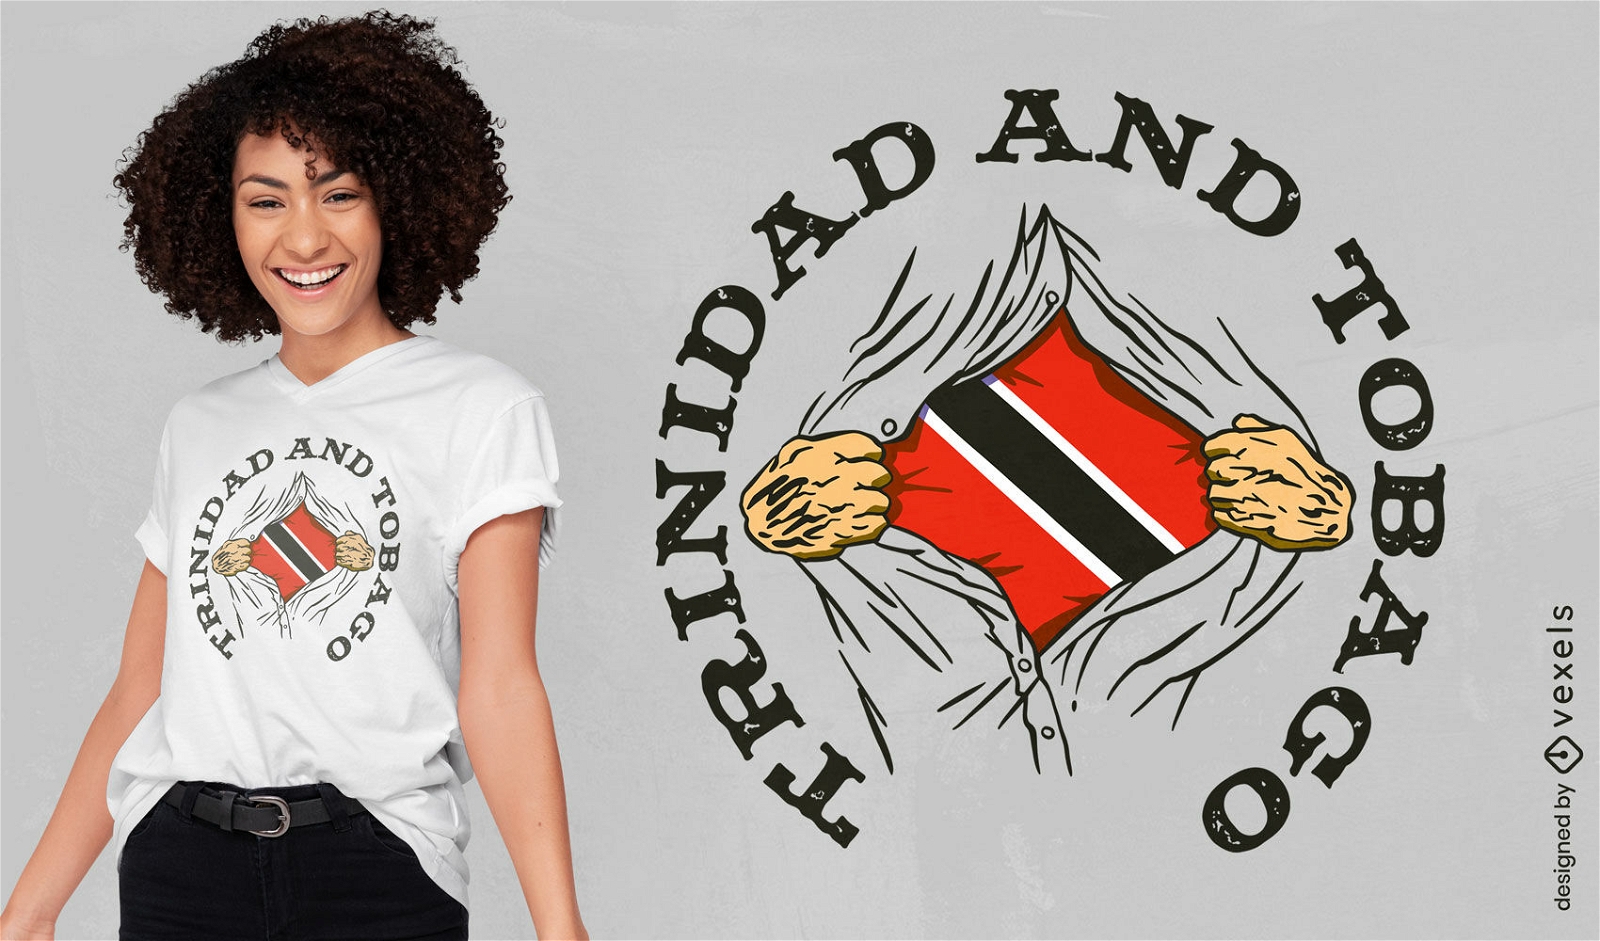 Trinidad and tobago flag t-shirt design